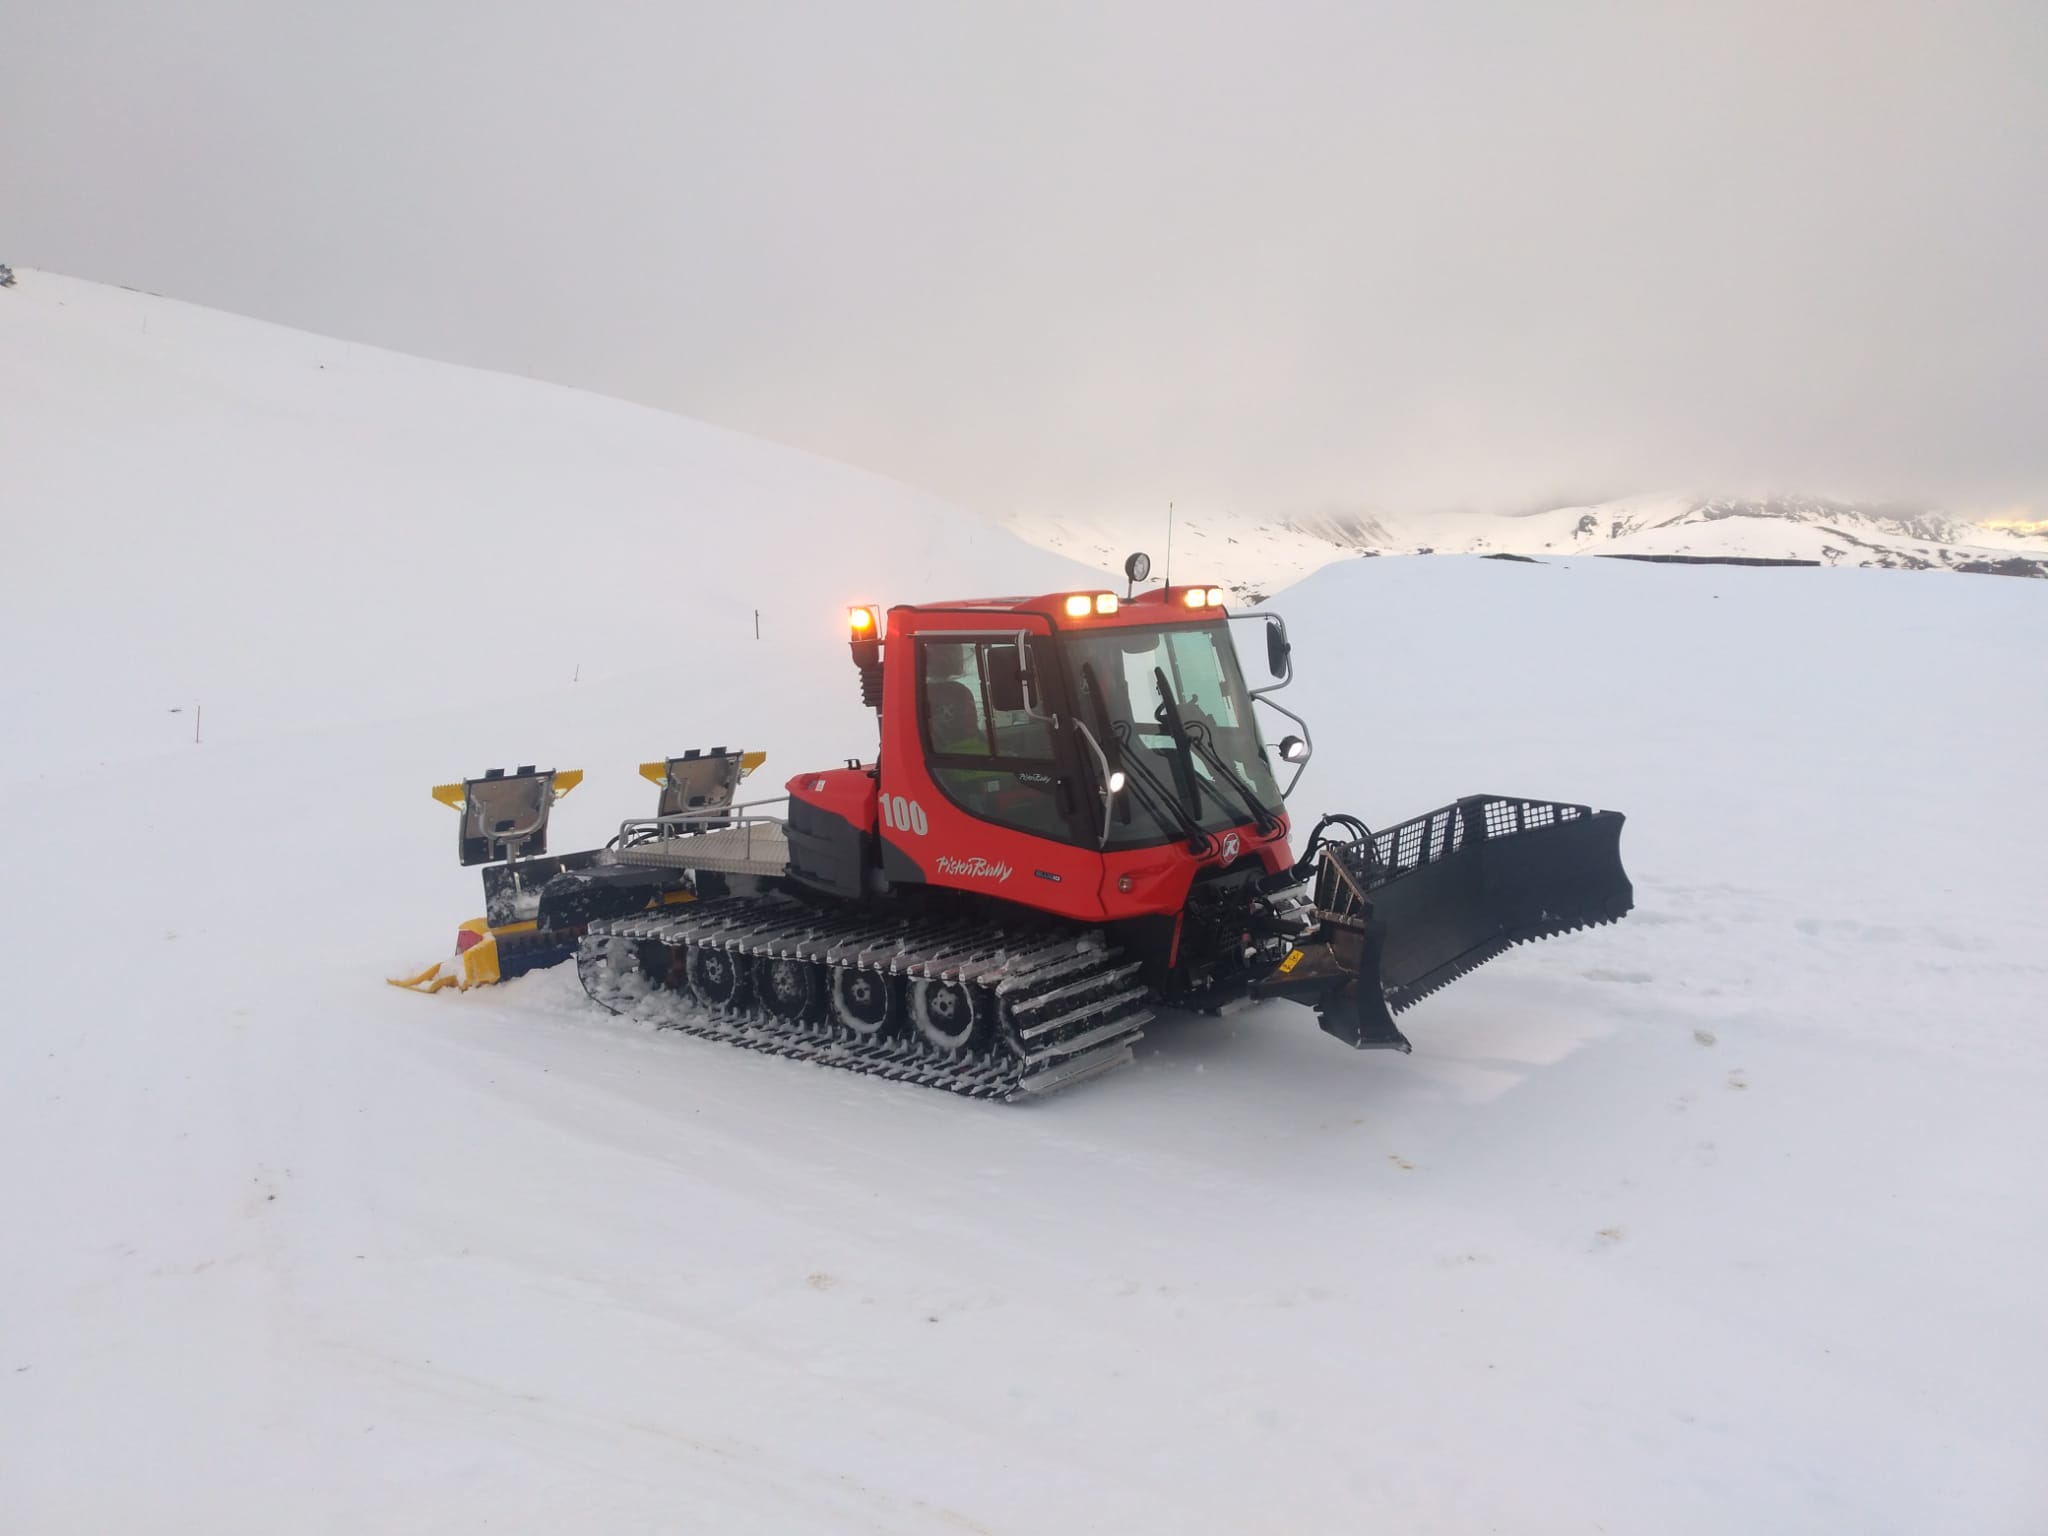 Nueva máquina quitanieves adquirida para la nueva temporada del Centro de Esquí Nórdico Larra-Belagua